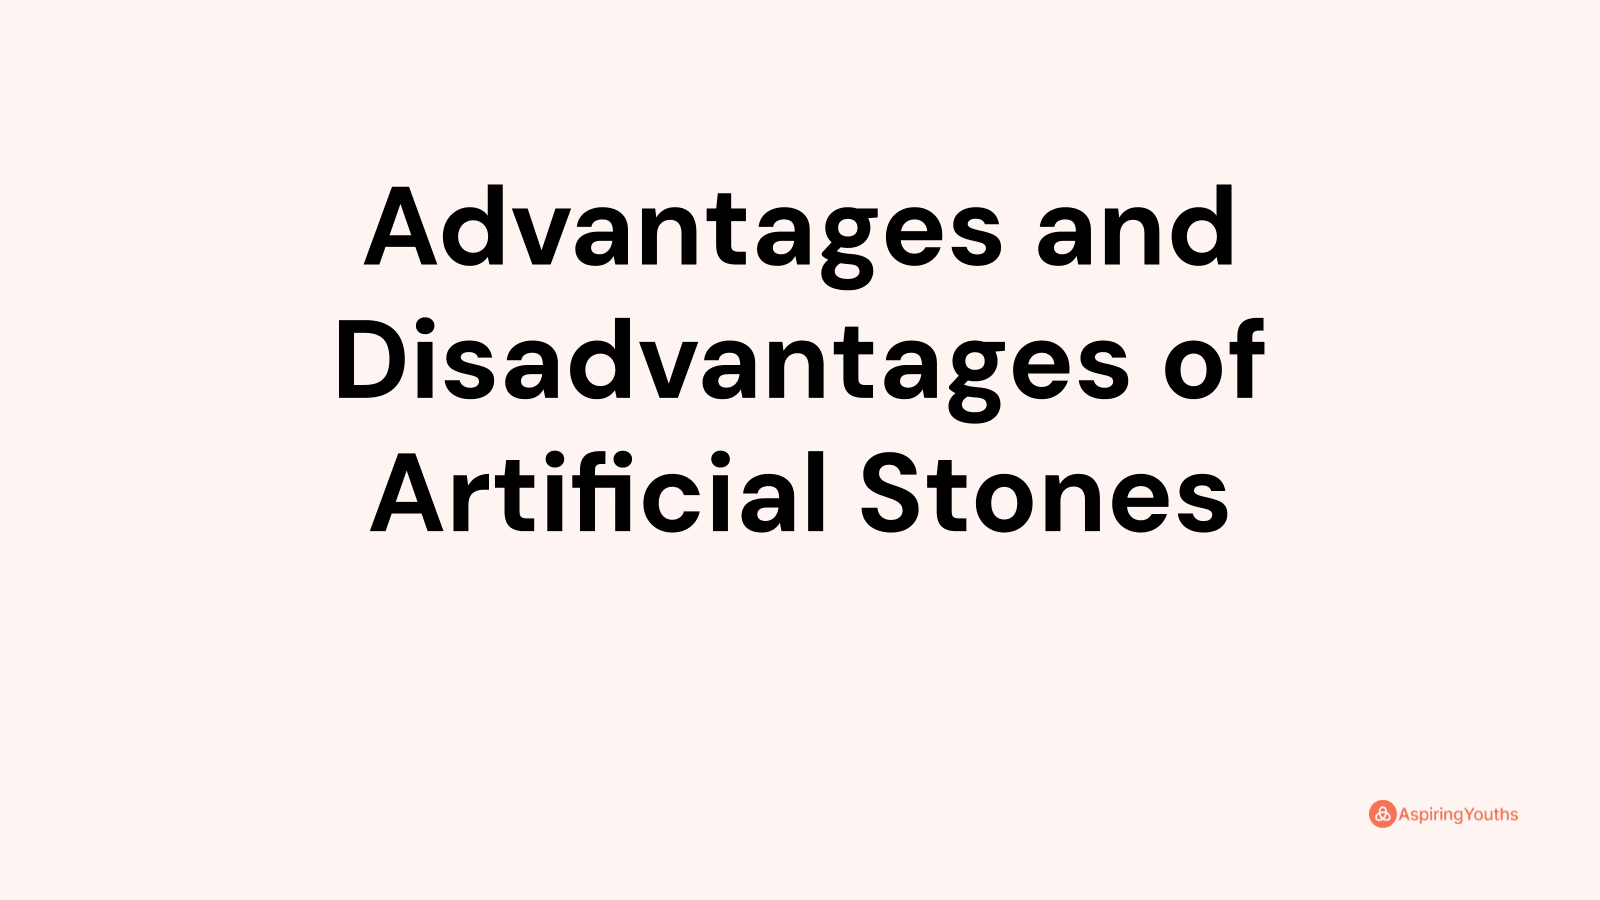 Advantages and disadvantages of Artificial Stones